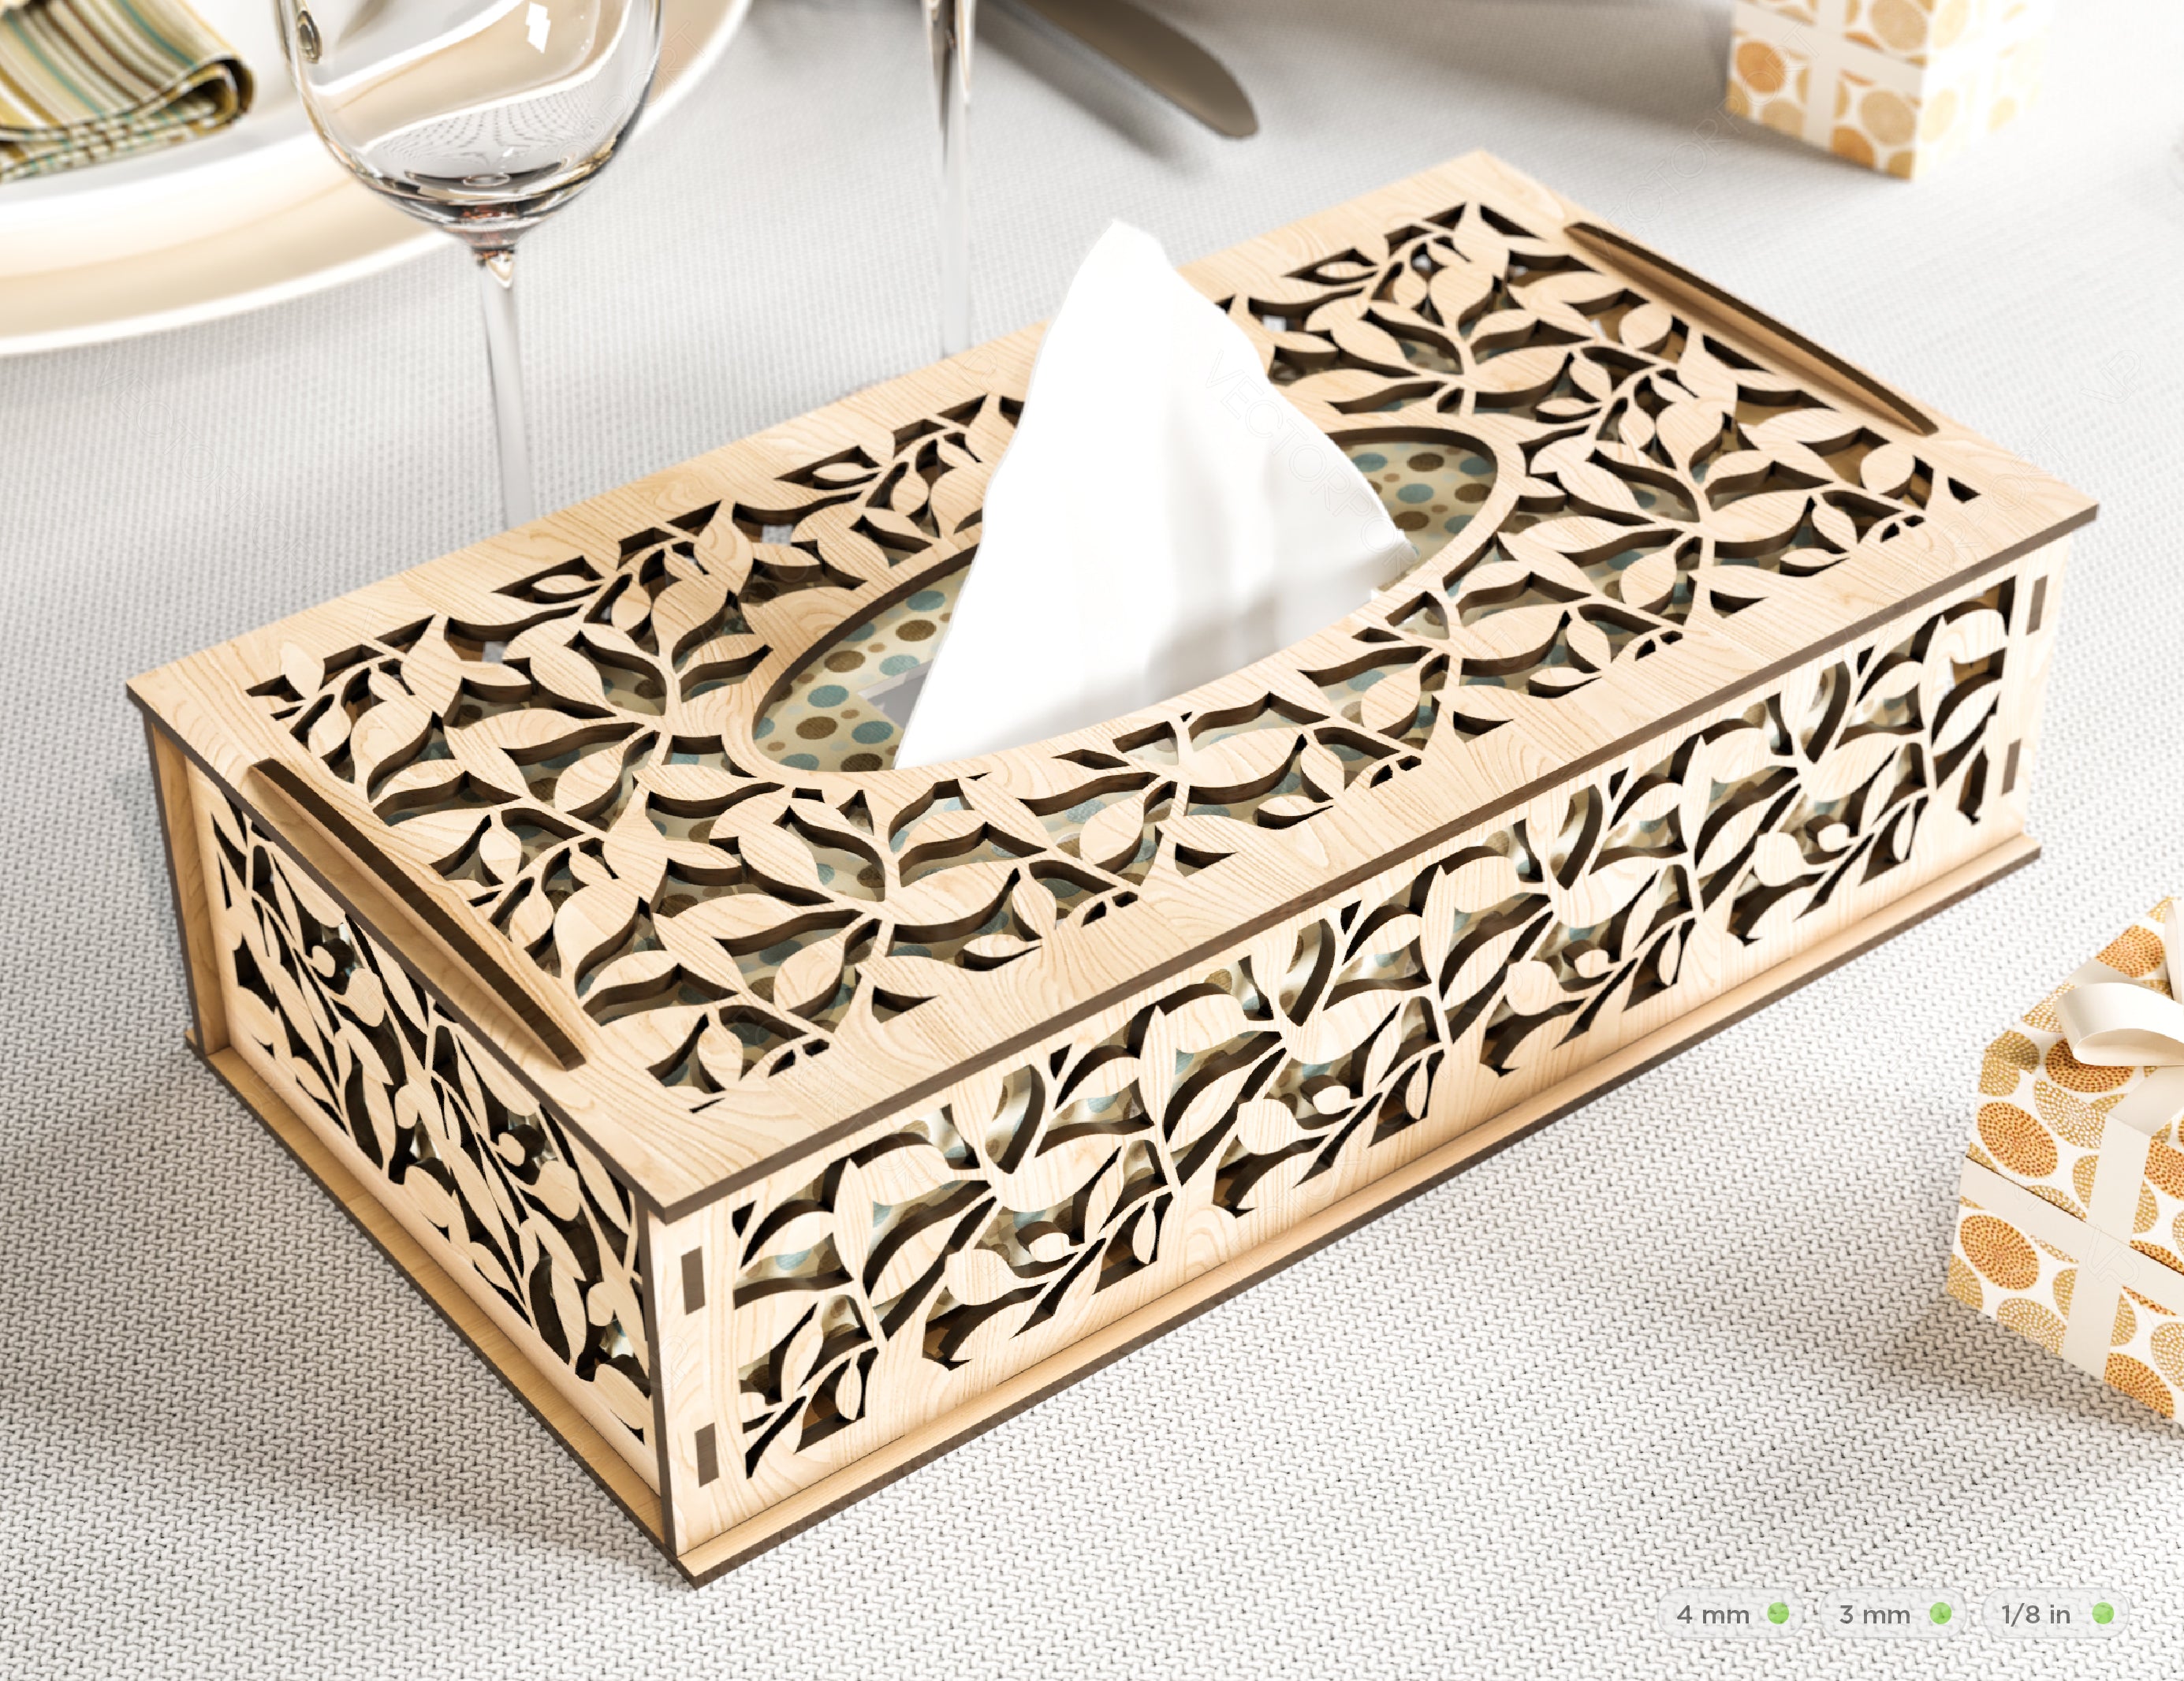 Decorative Laser Cut Tissue Box heart shape Tabletop wooden napkin cover Glowforge SVG |#167|